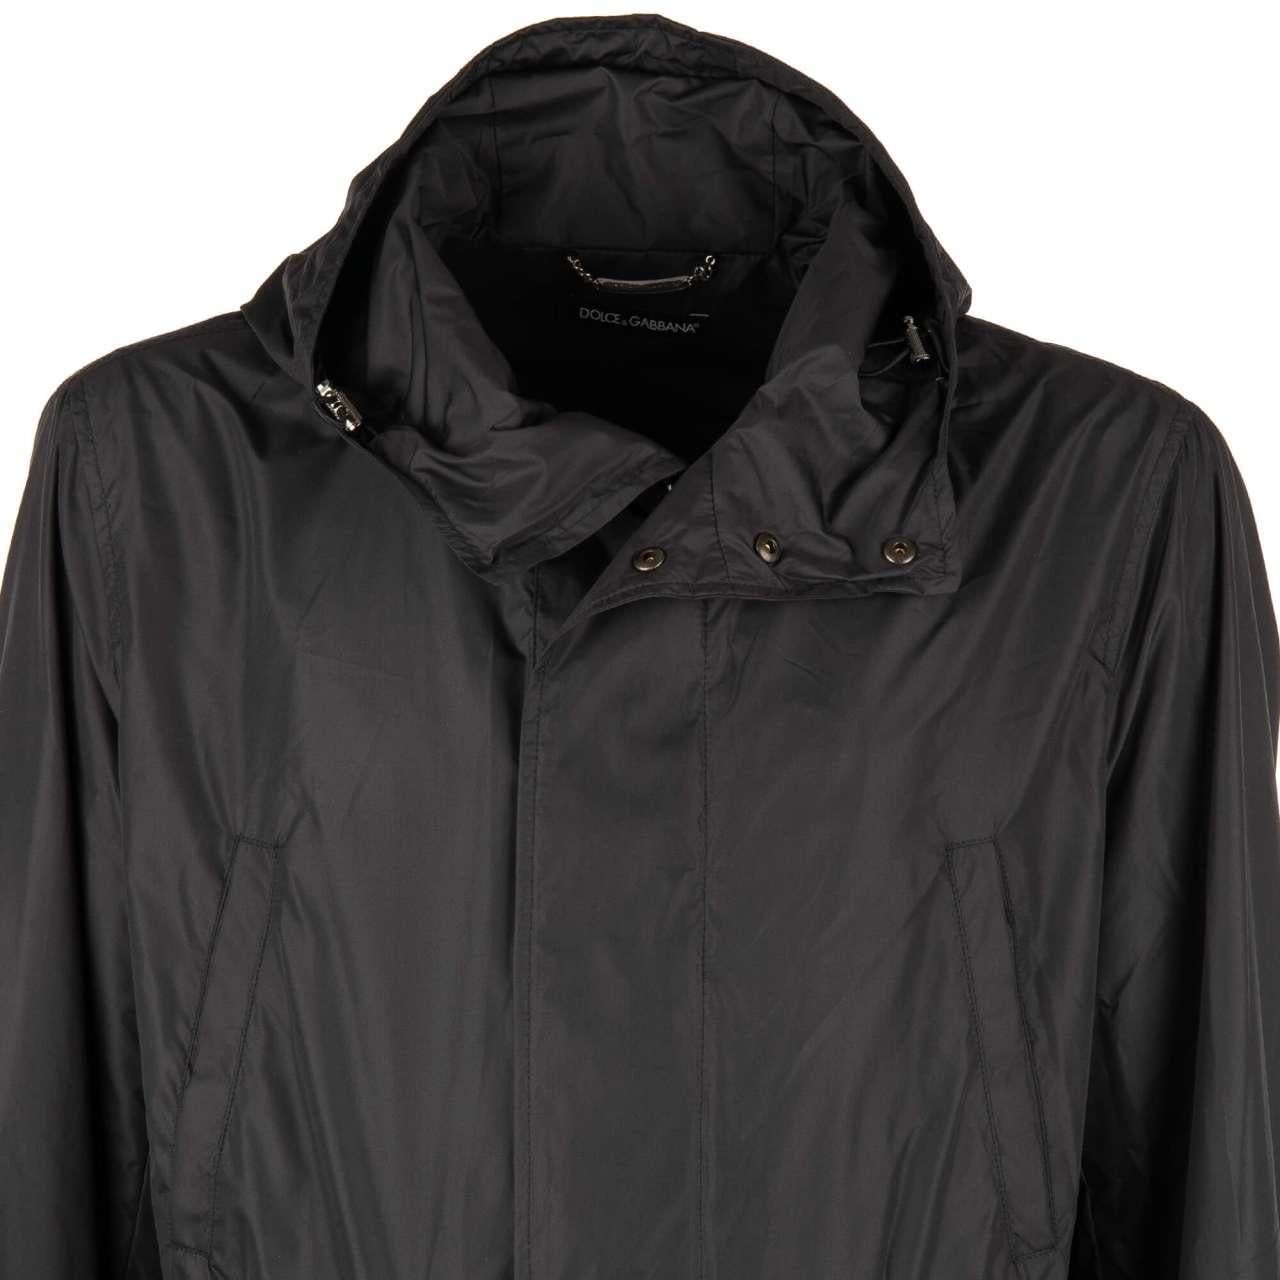 Dolce & Gabbana Light Hooded Rain Parka Jacket with Pockets and Logo Black 50 For Sale 2